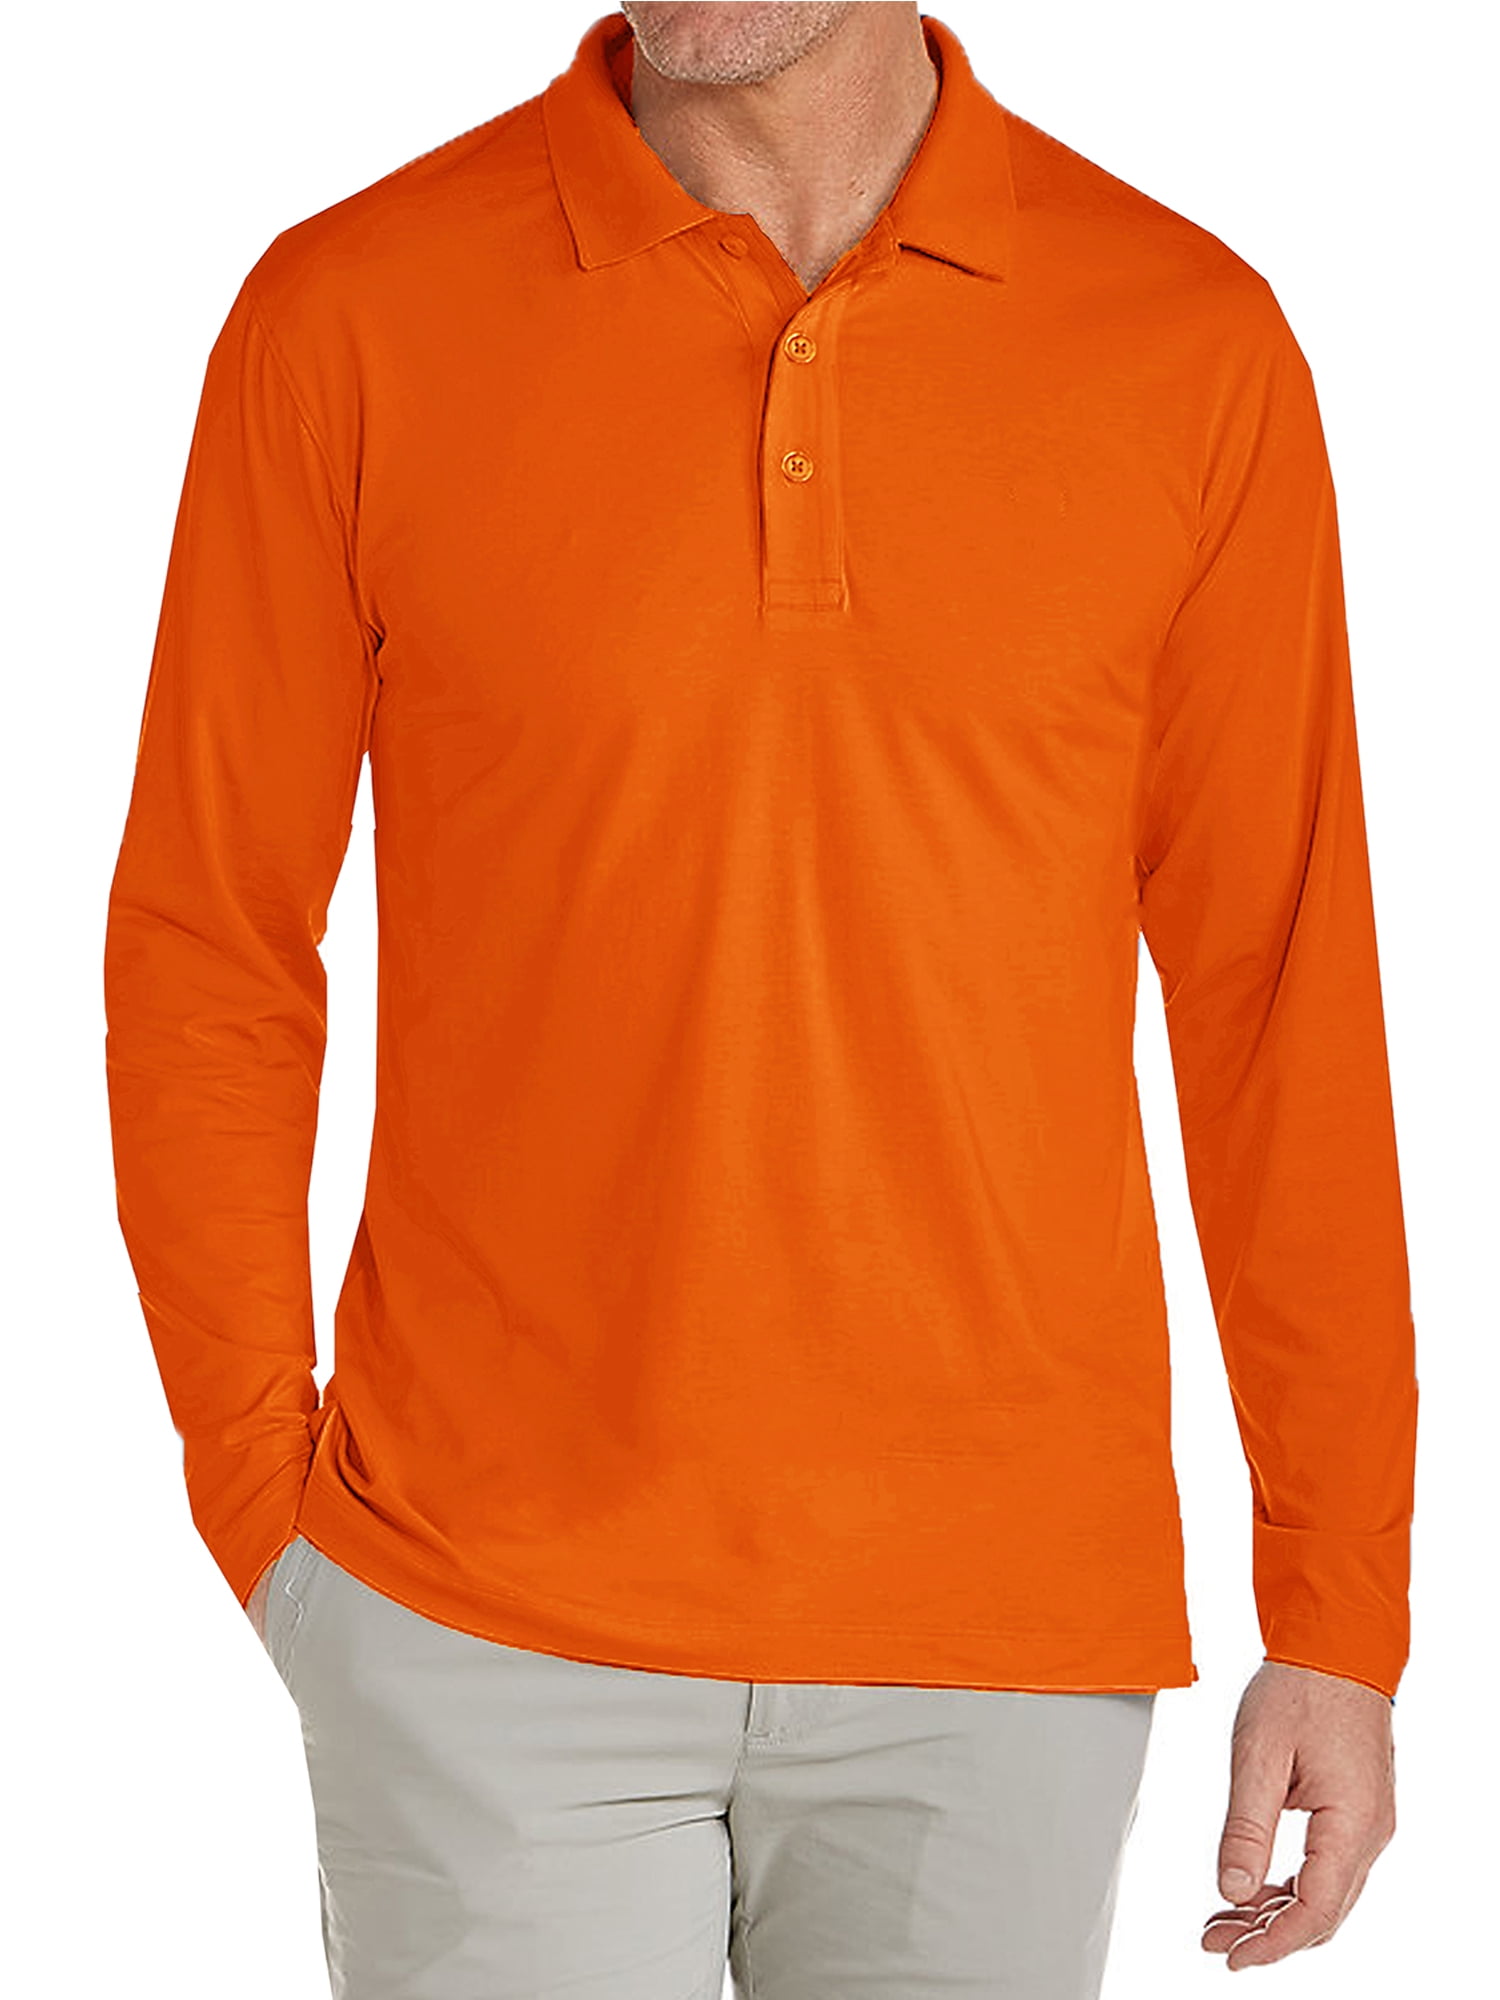 Men's Long Sleeve Polo Shirts - Walmart.com